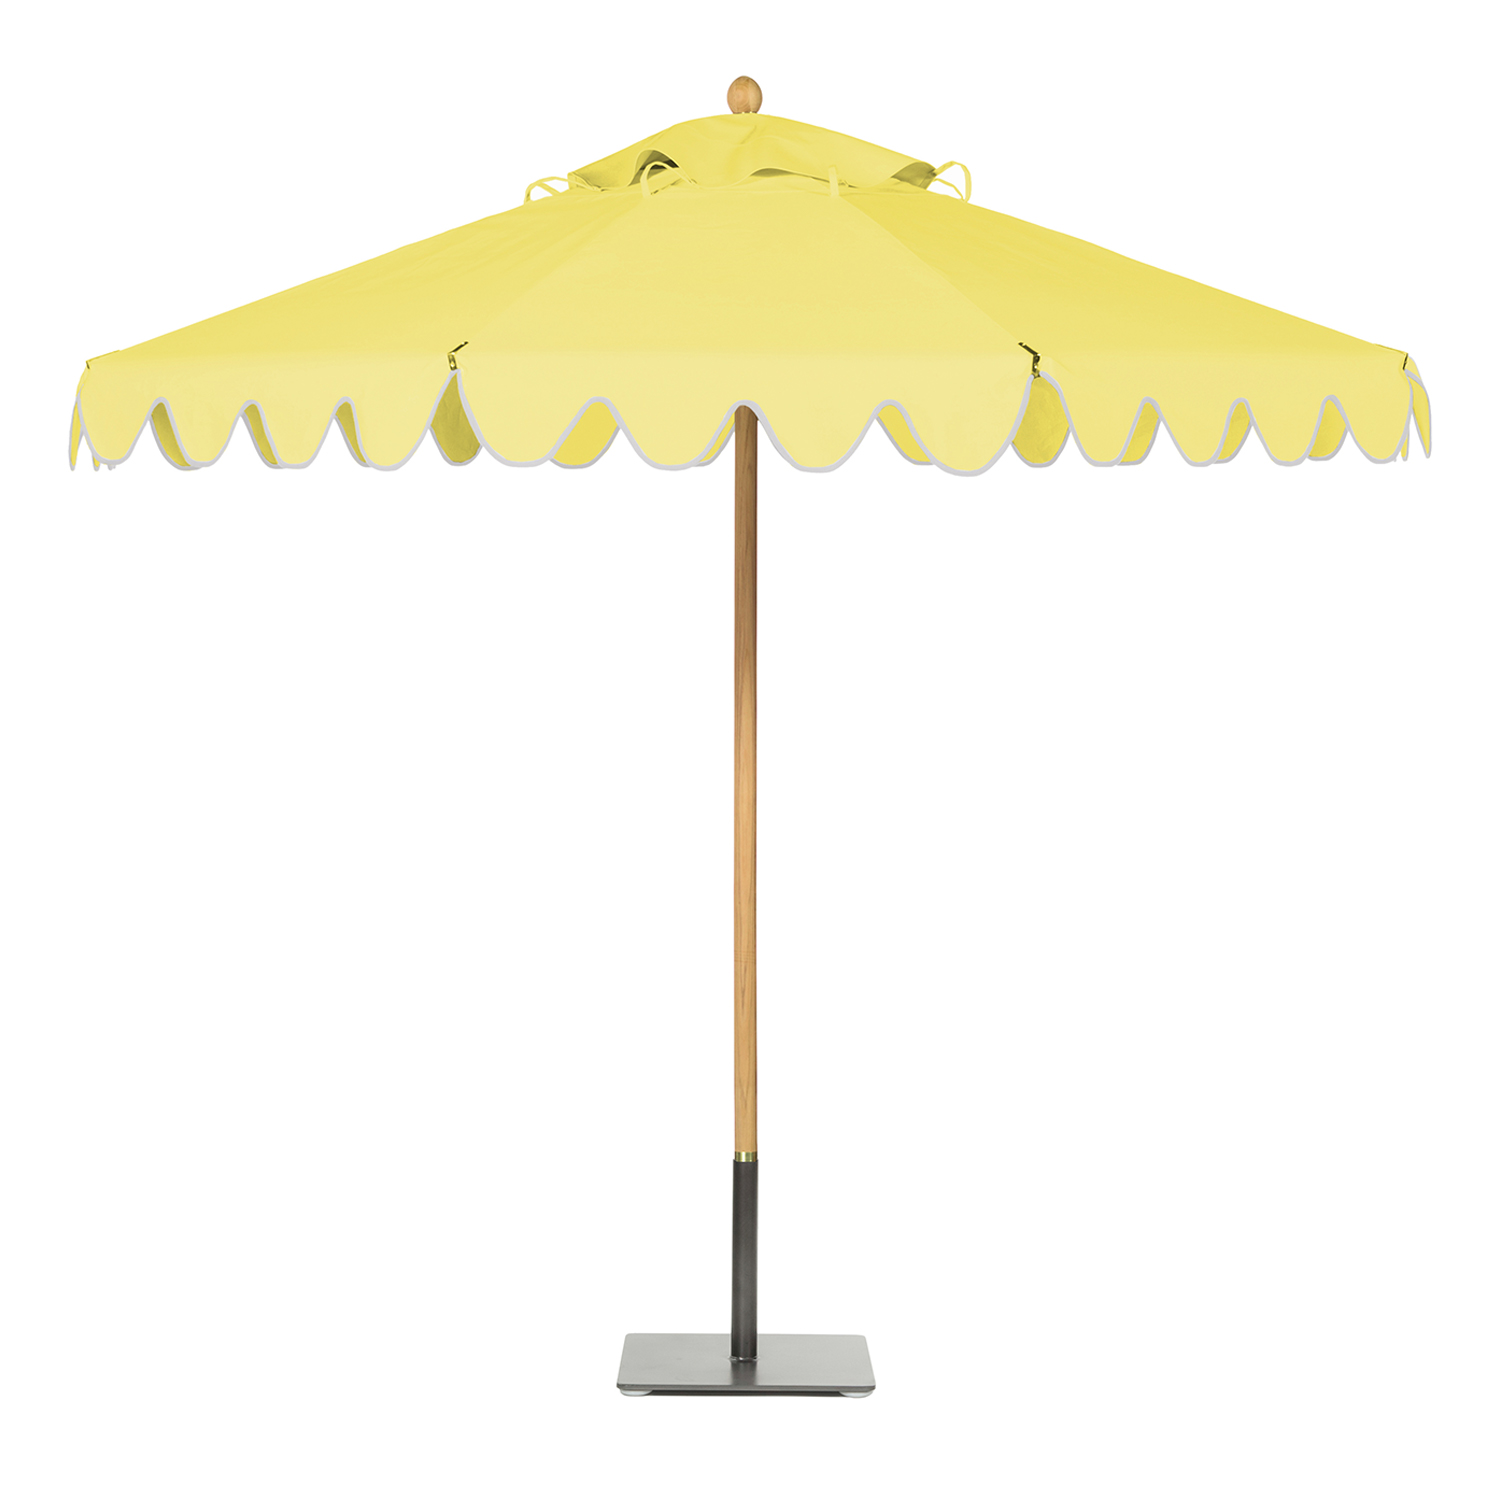 Image of Mission Terrace oak umbrella